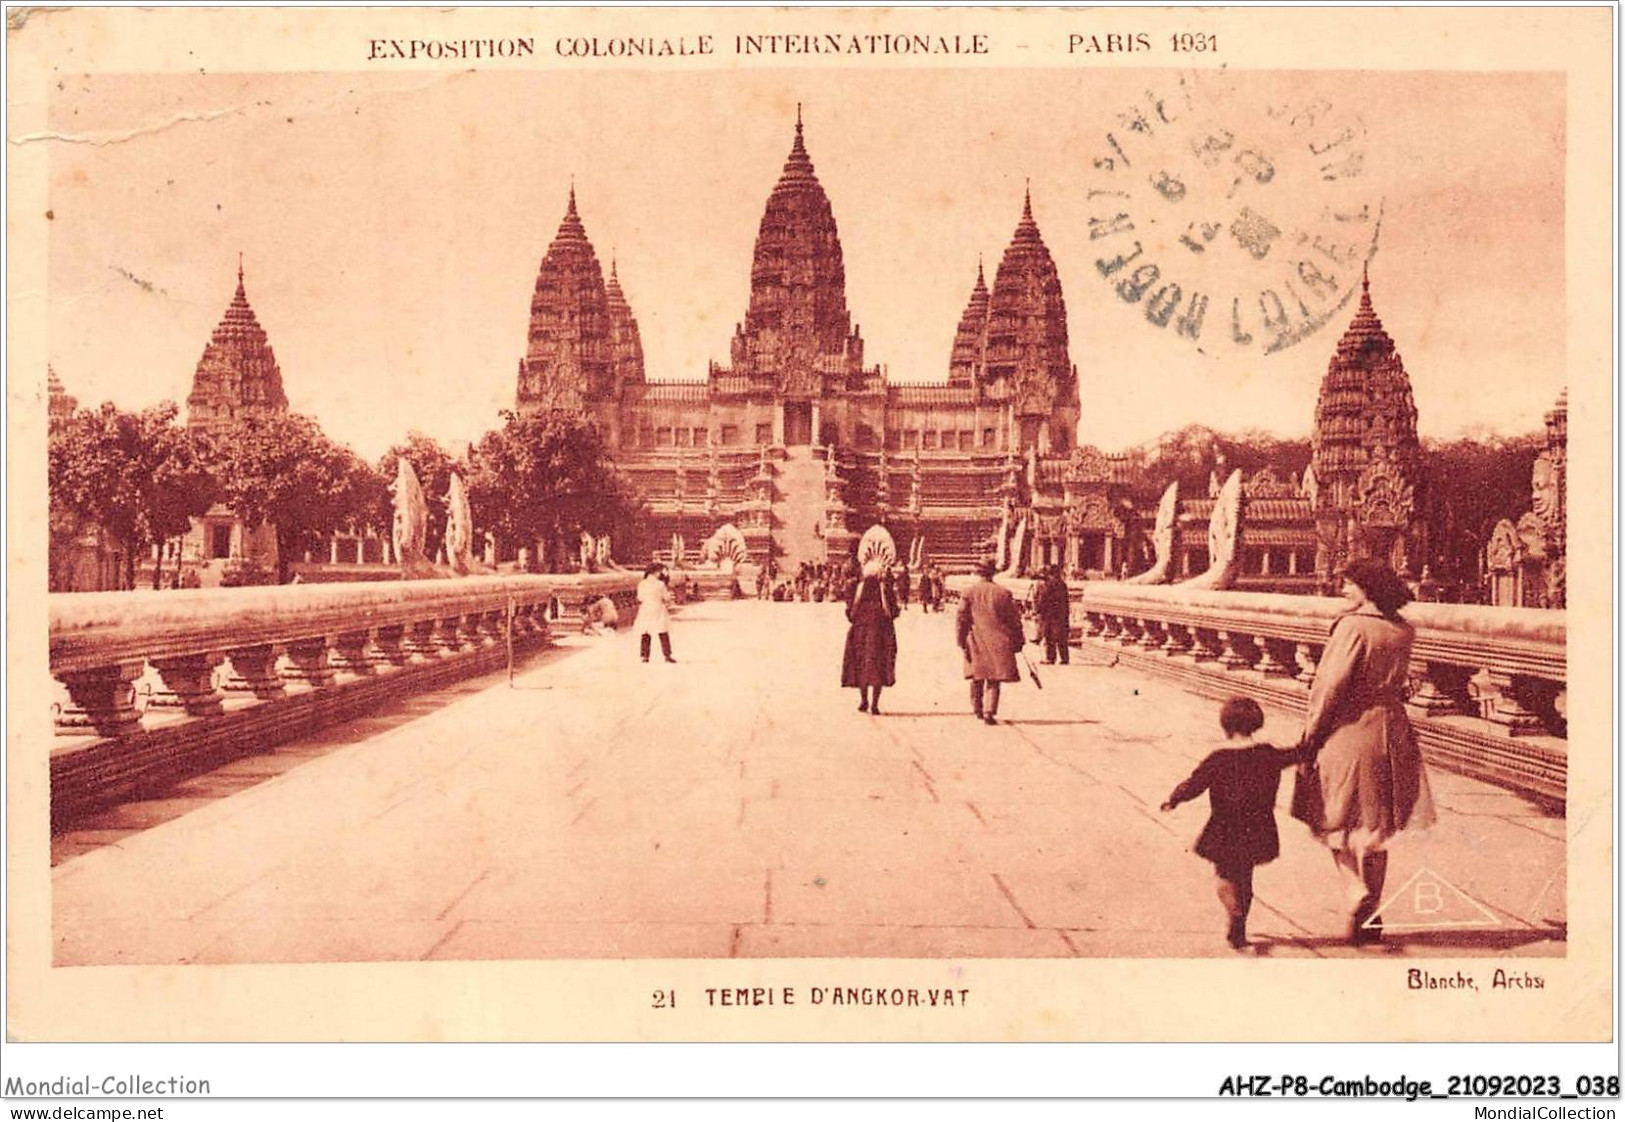 AHZP8-CAMBODGE-0702 - EXPOSITION COLONIALE INTERNATIONALE - PARIS 1931 - TEMPLE D'ANGKOR-VAT - Cambodia